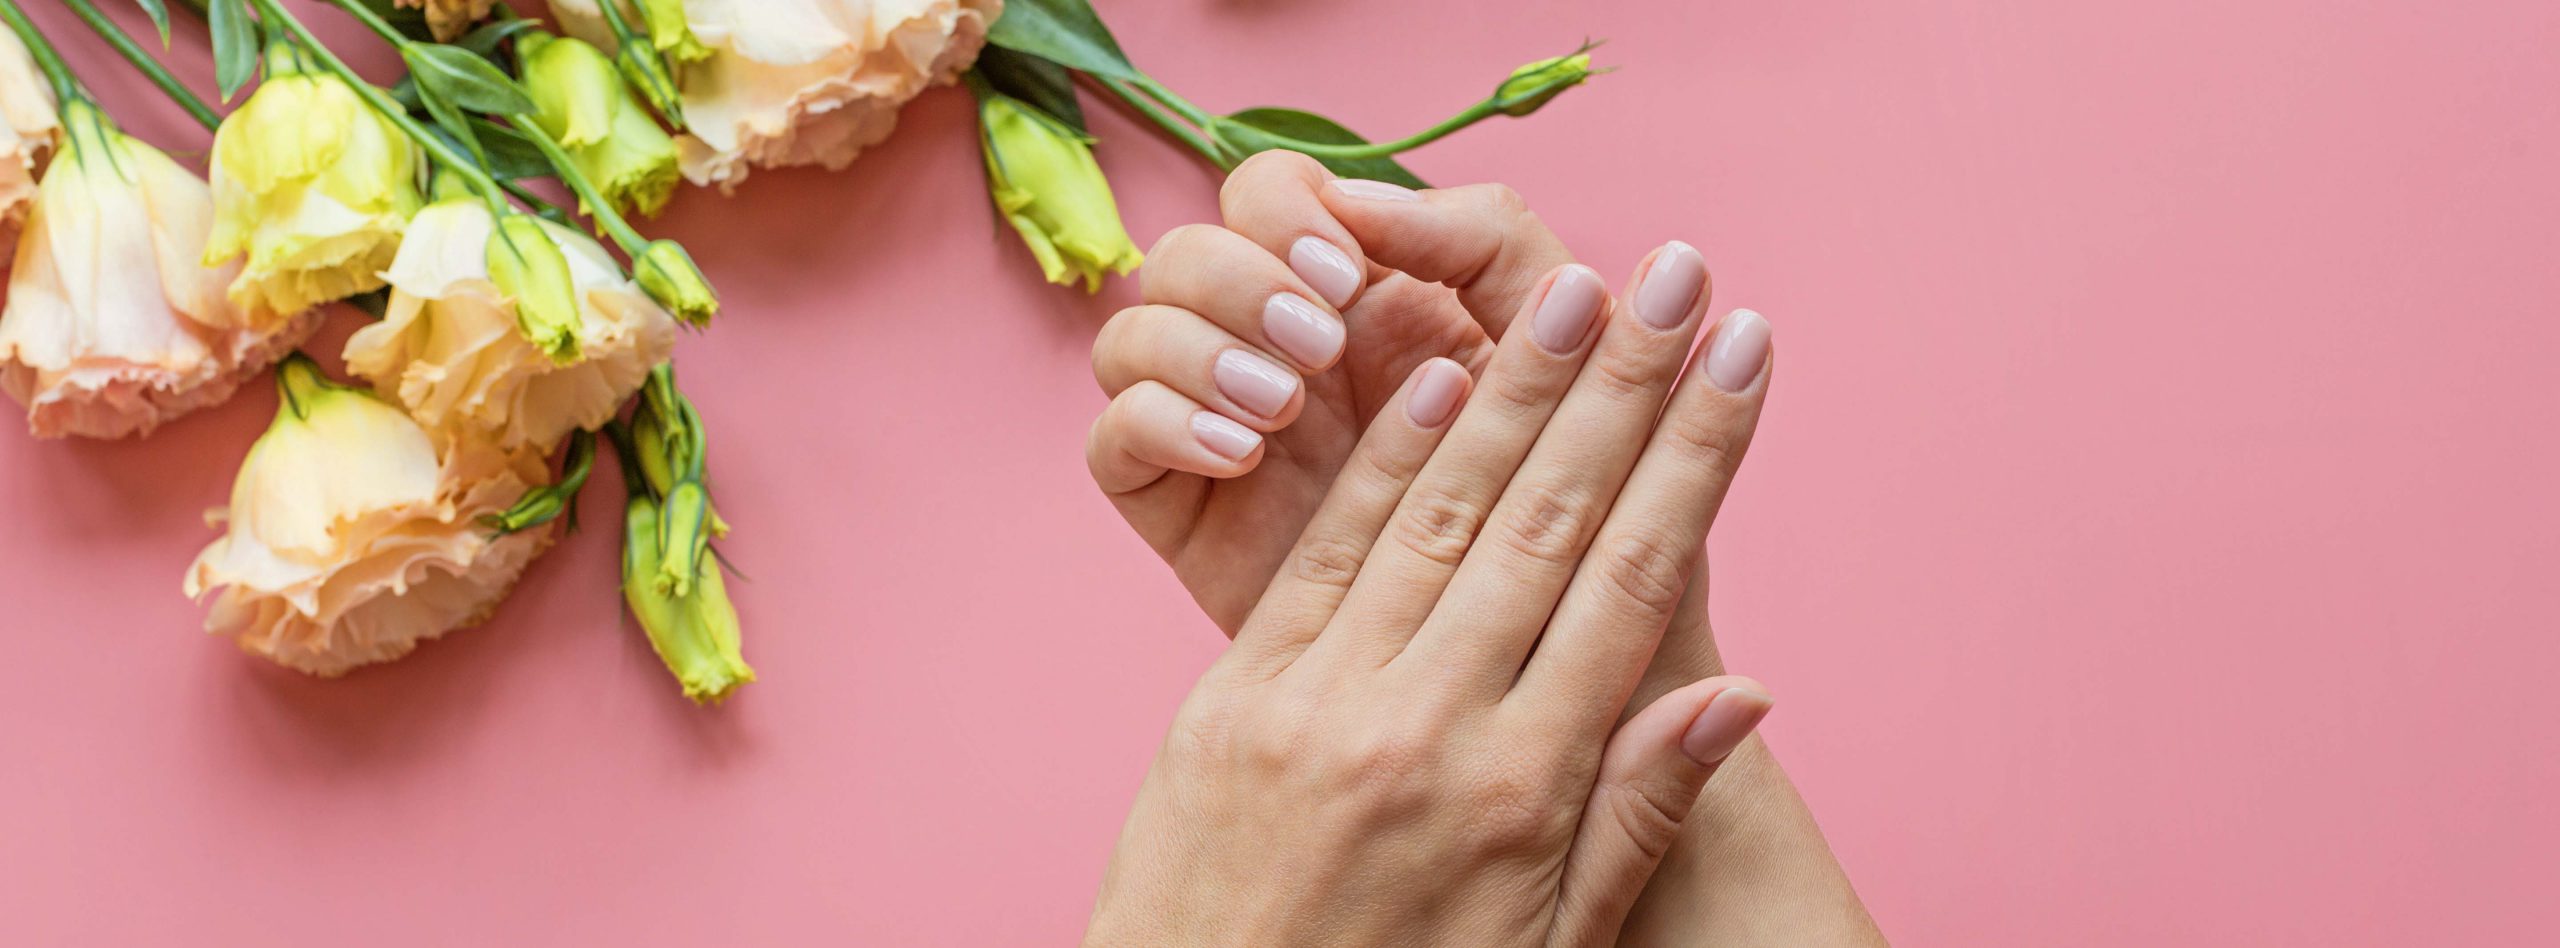 woman-hands-manicure-manicured-nails-gel-polish-fa-MCCBCFJ